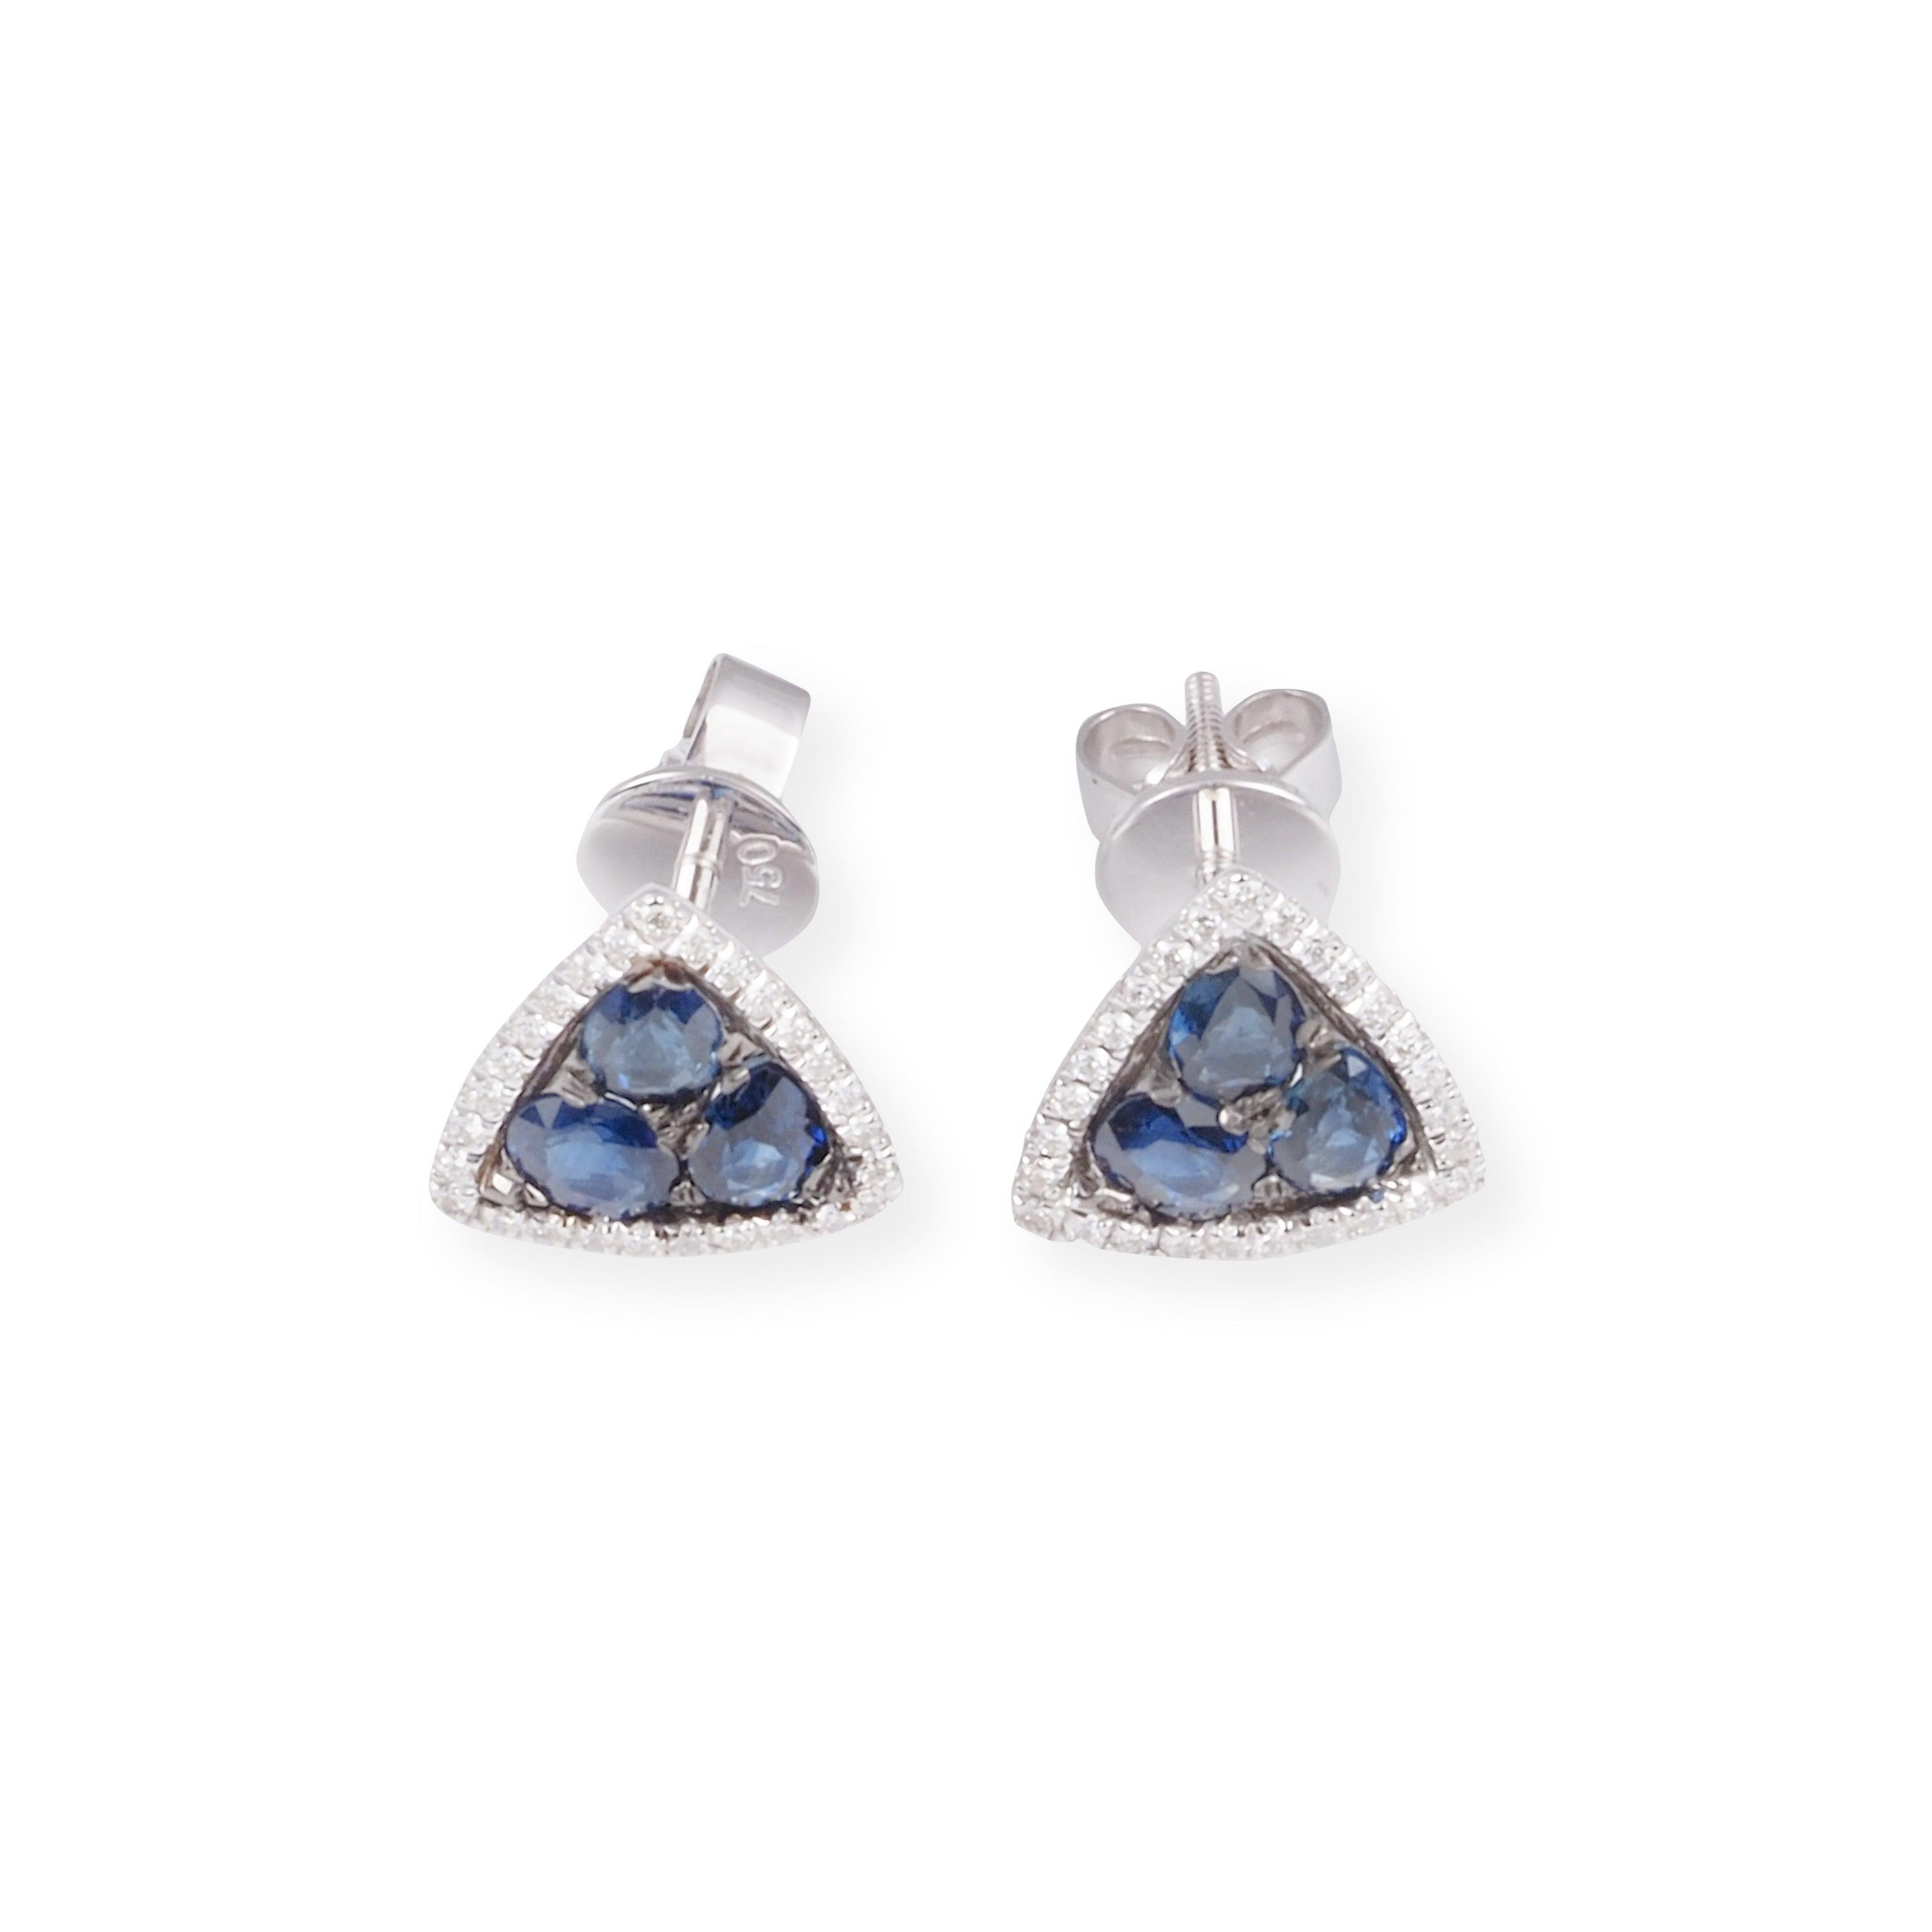 18ct White Gold Diamond and Blue Sapphire Triangle Pendant & Earrings P-7968/E-P7968 - Minar Jewellers